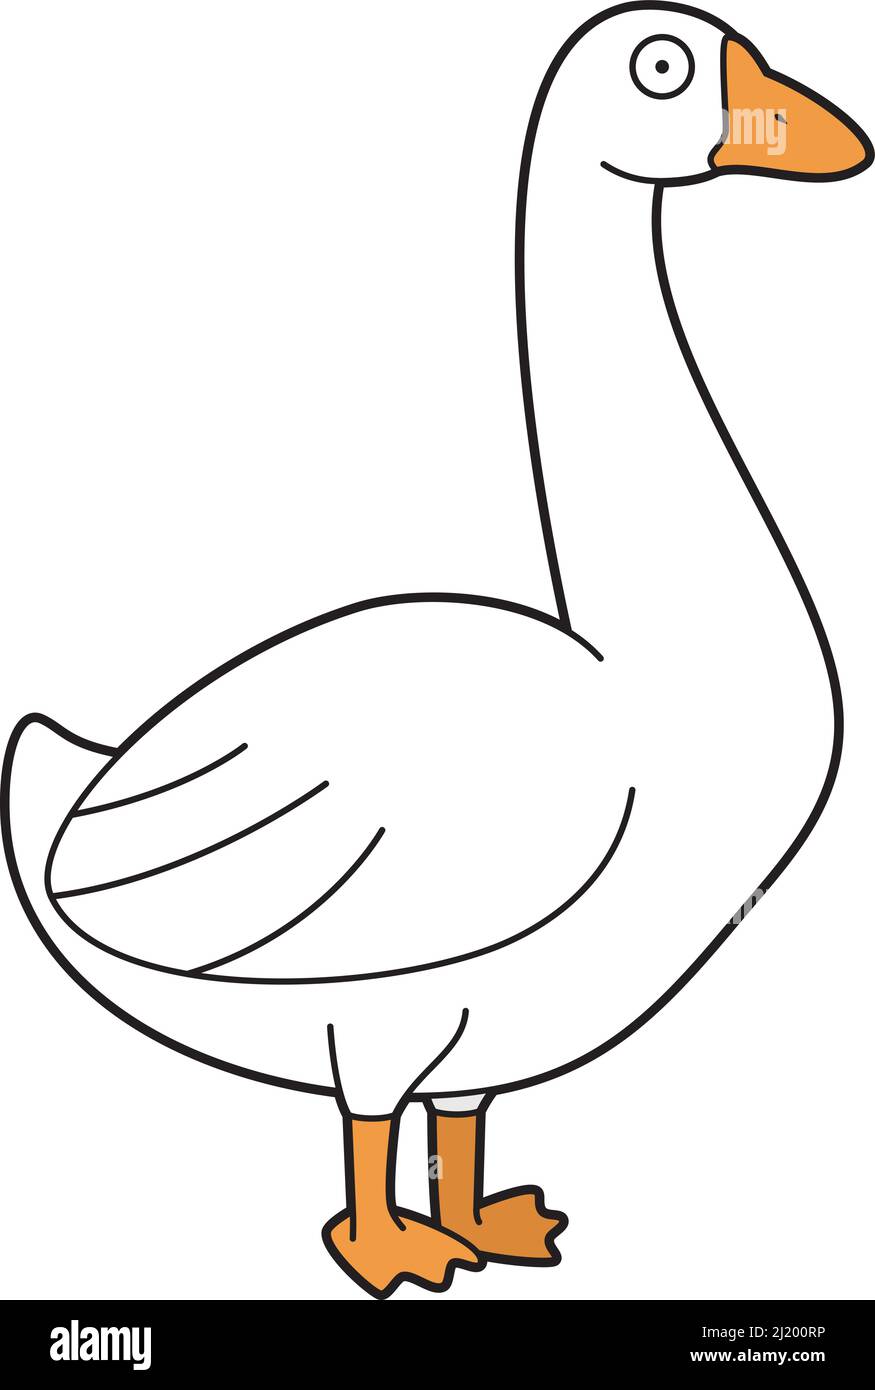 Cute cartoon vector illustration of a goose Stock Vector